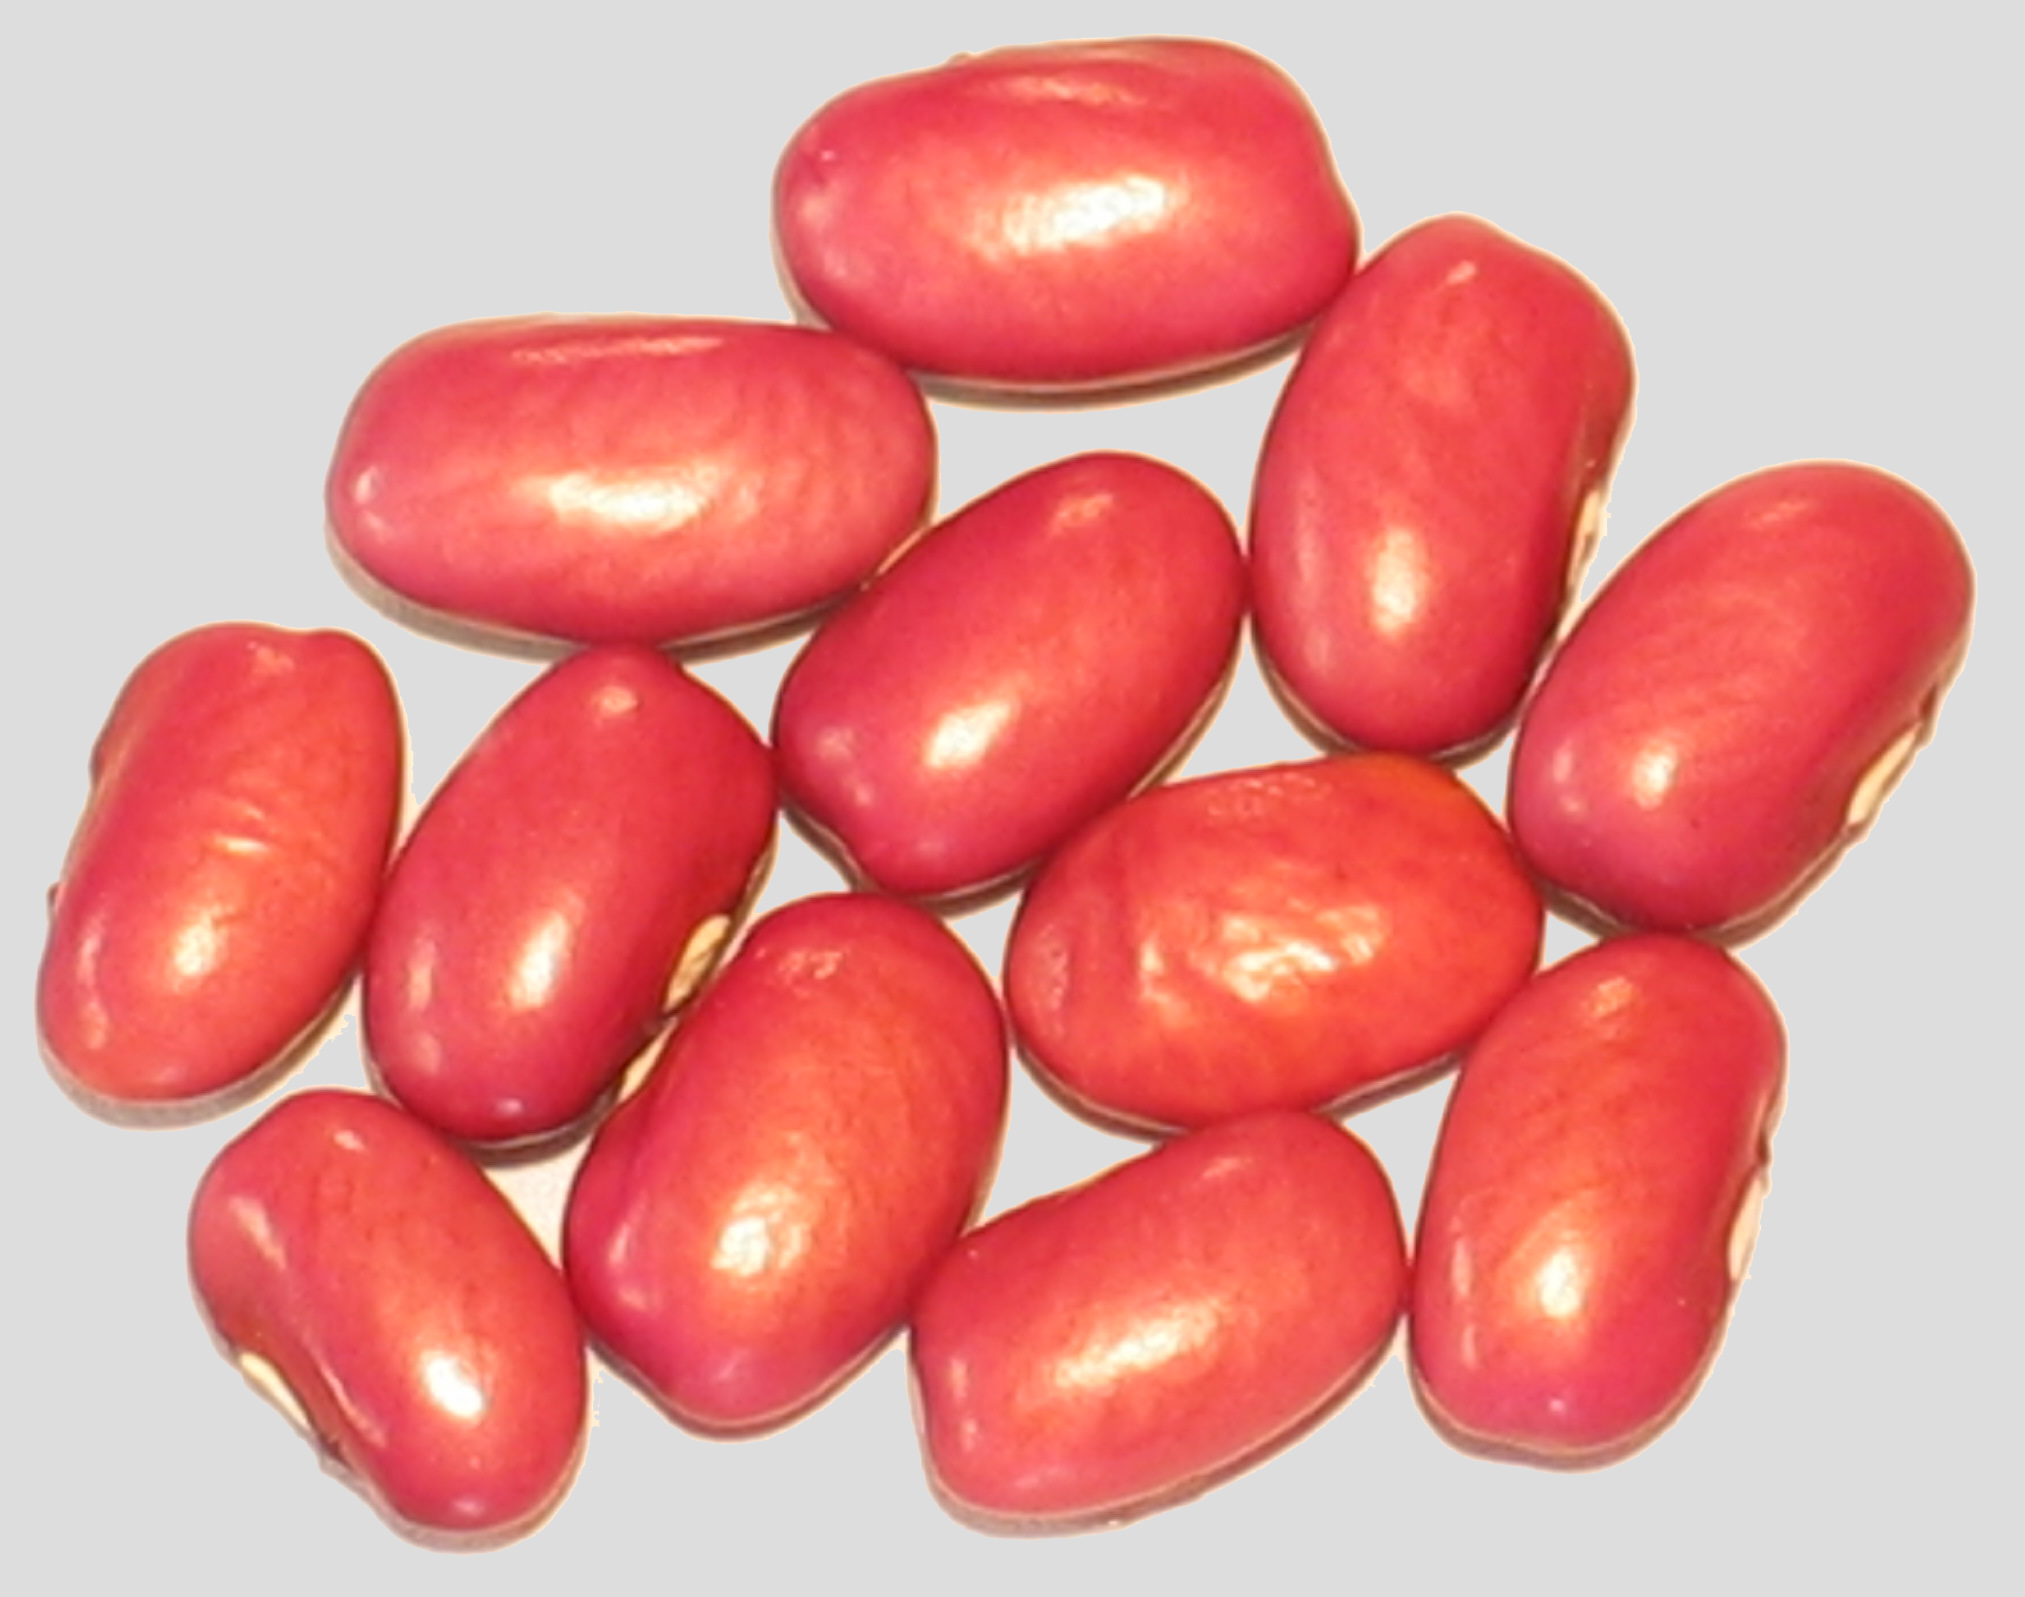 image of Tarahumara Purple beans